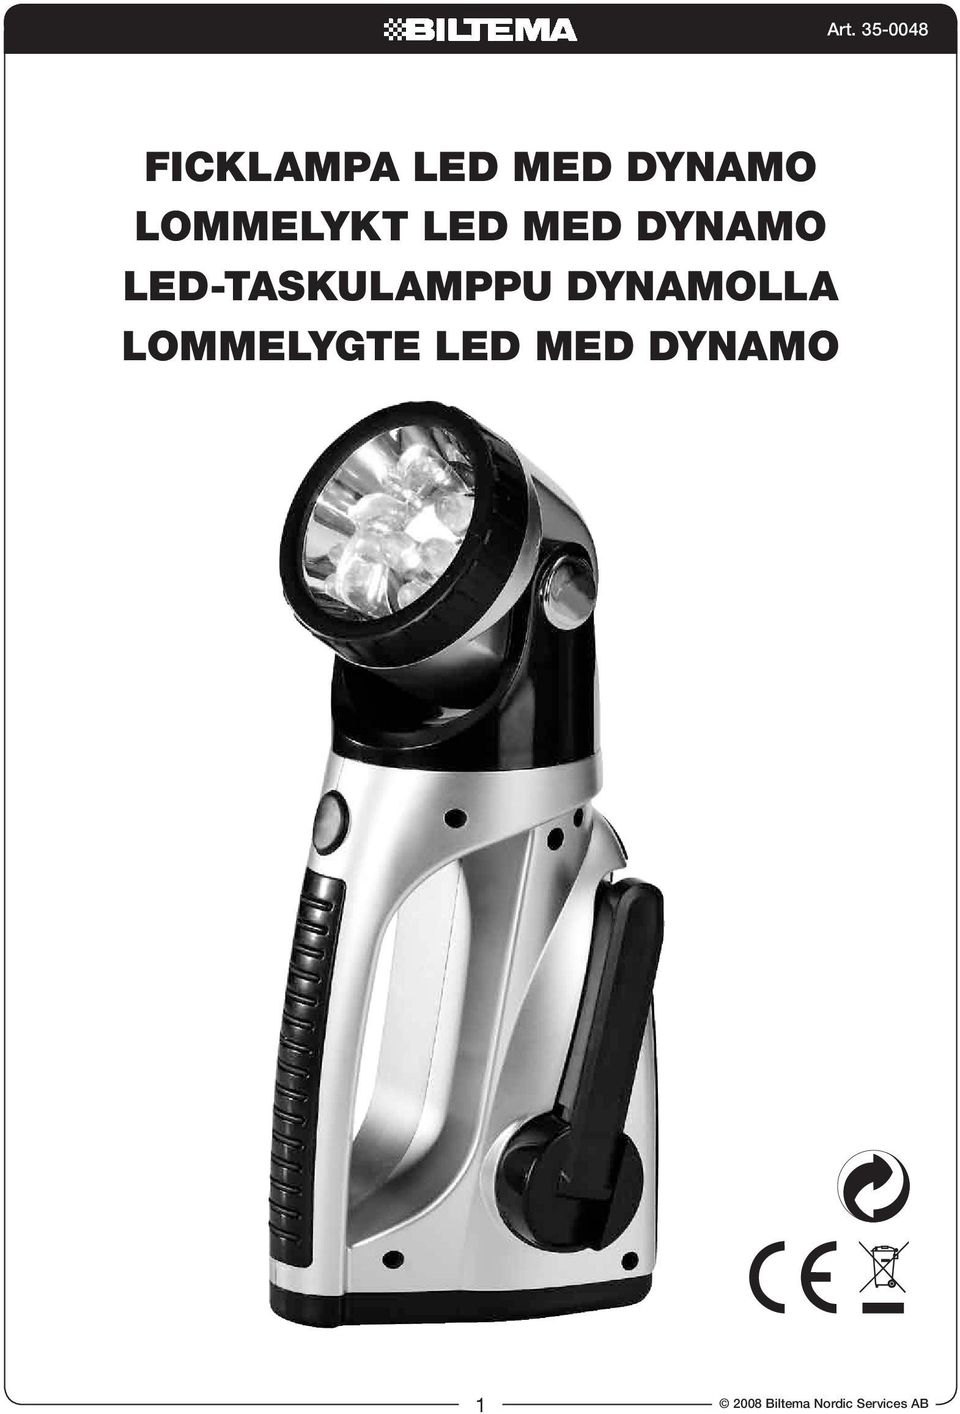 LED-taskulamppu dynamolla